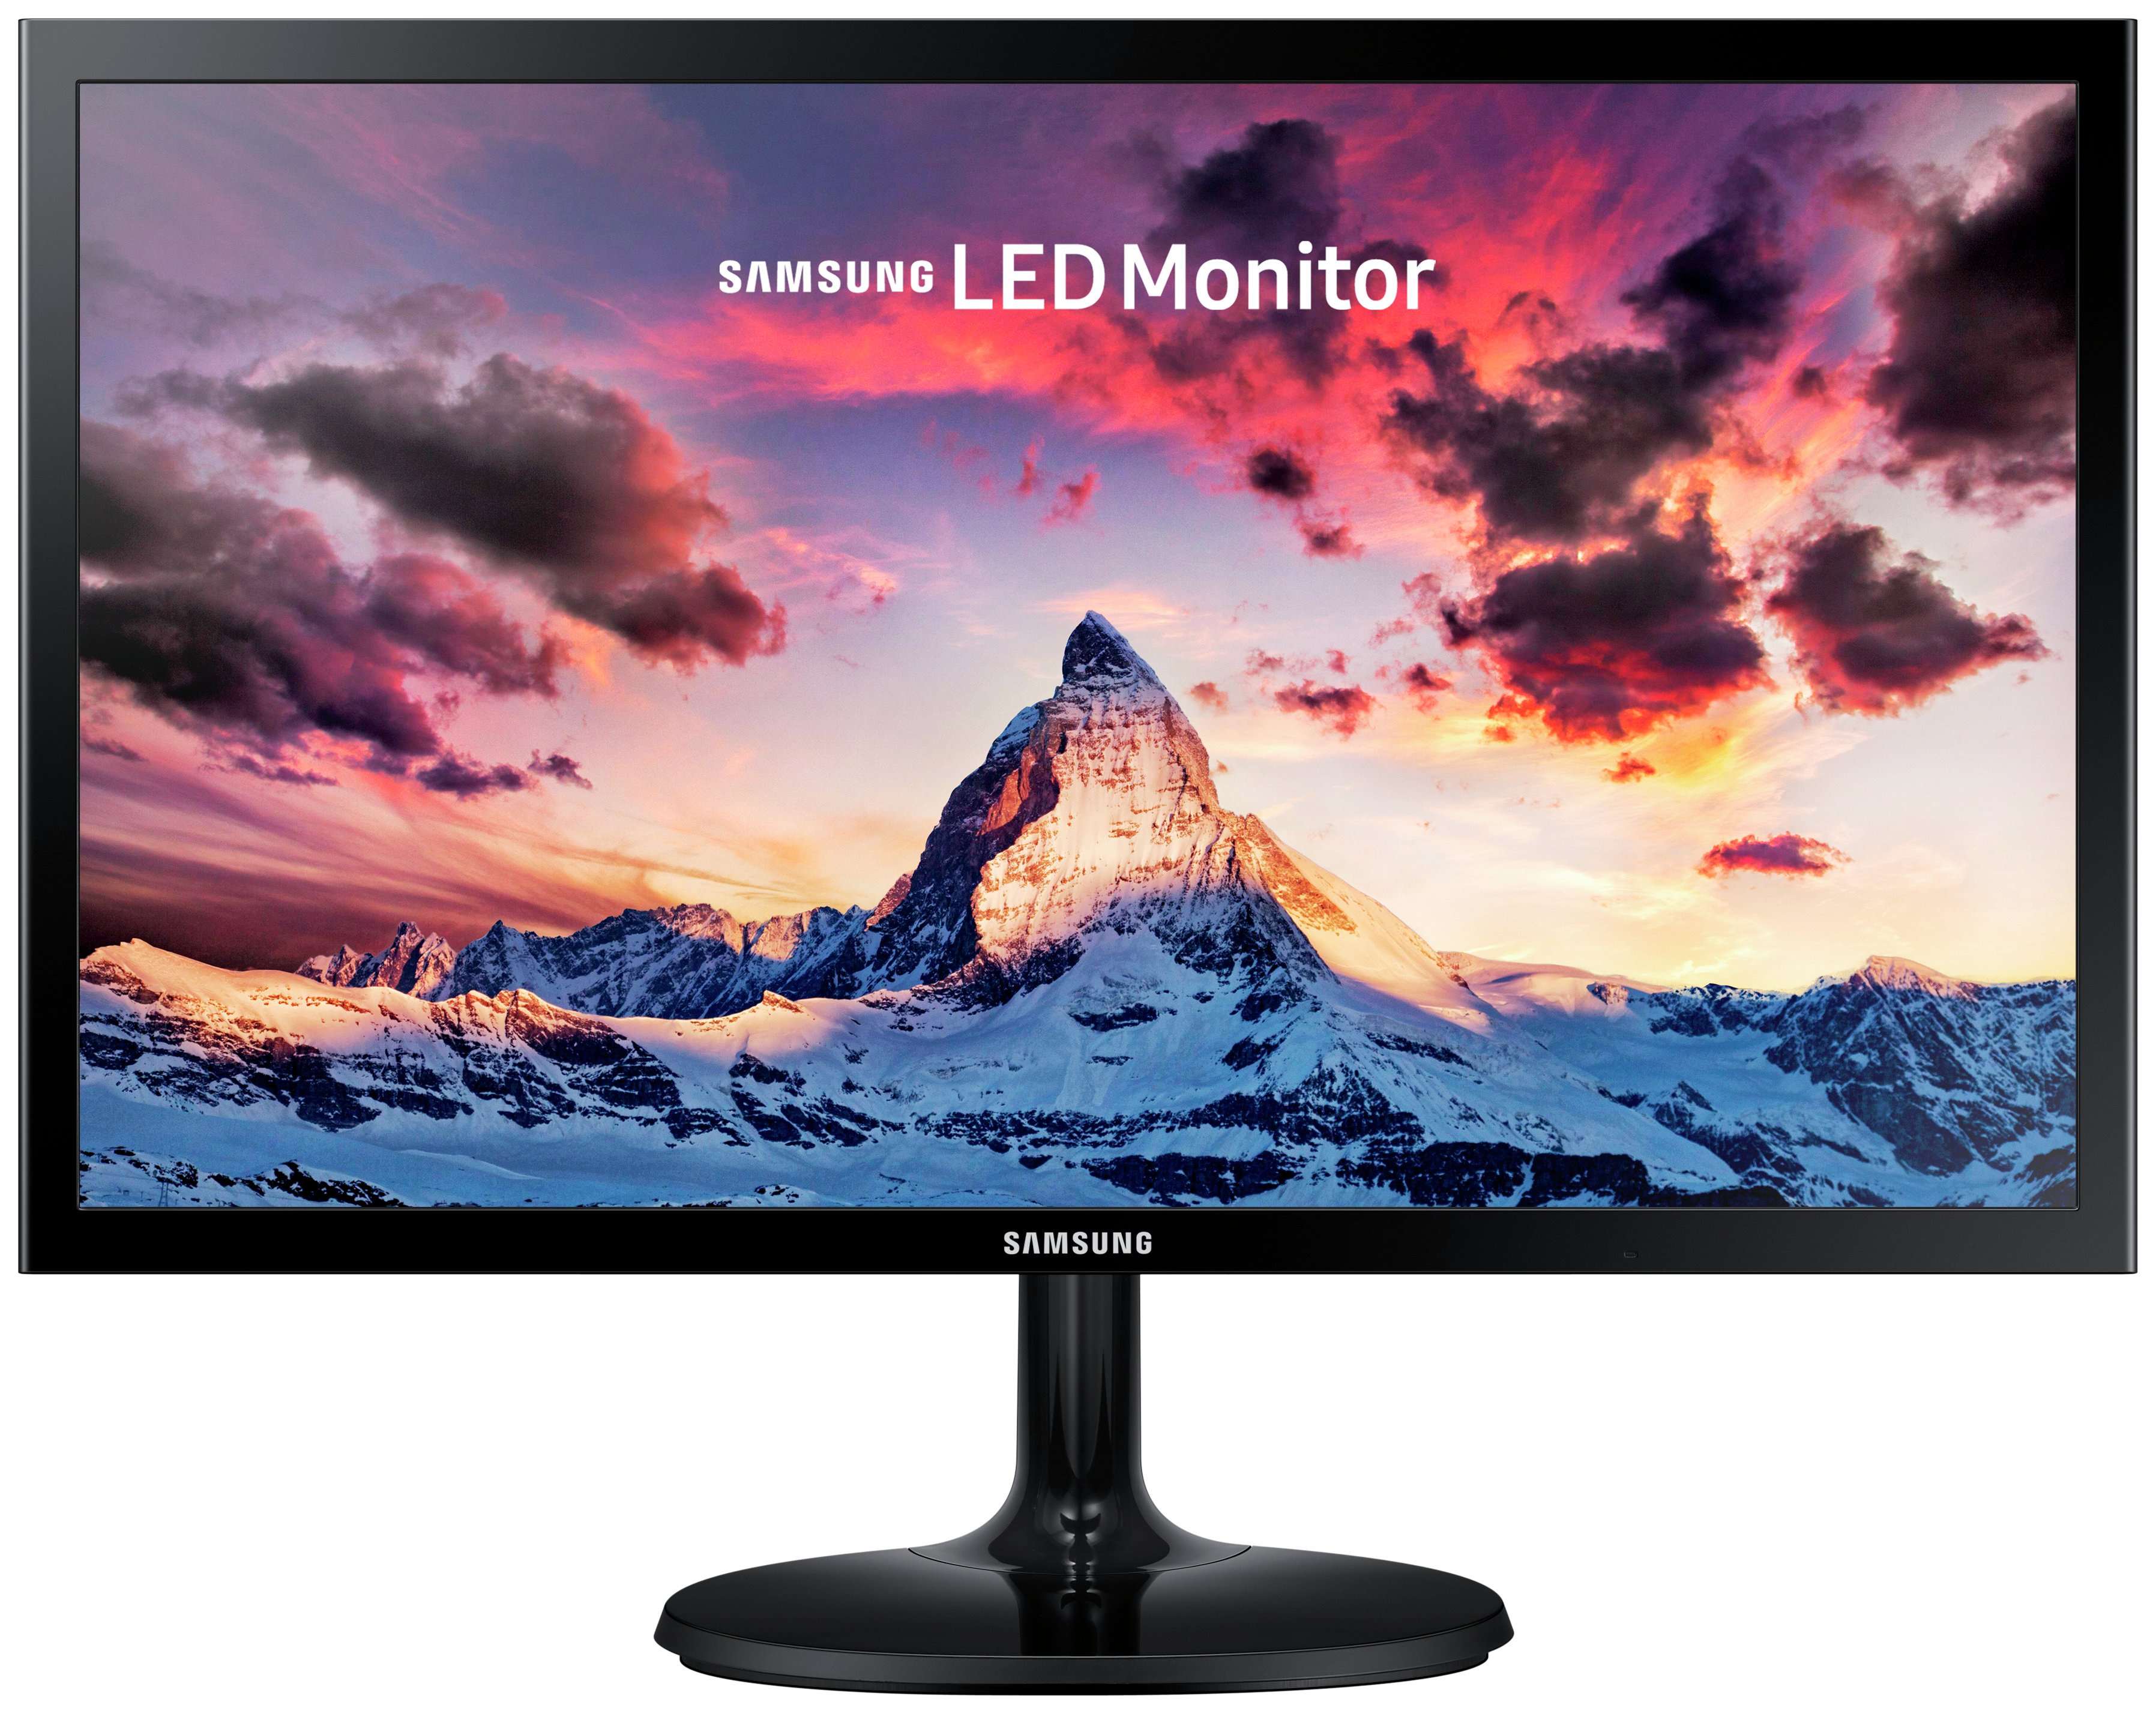 Samsung S22F352 22 Inch LED Monitor - Black Review thumbnail